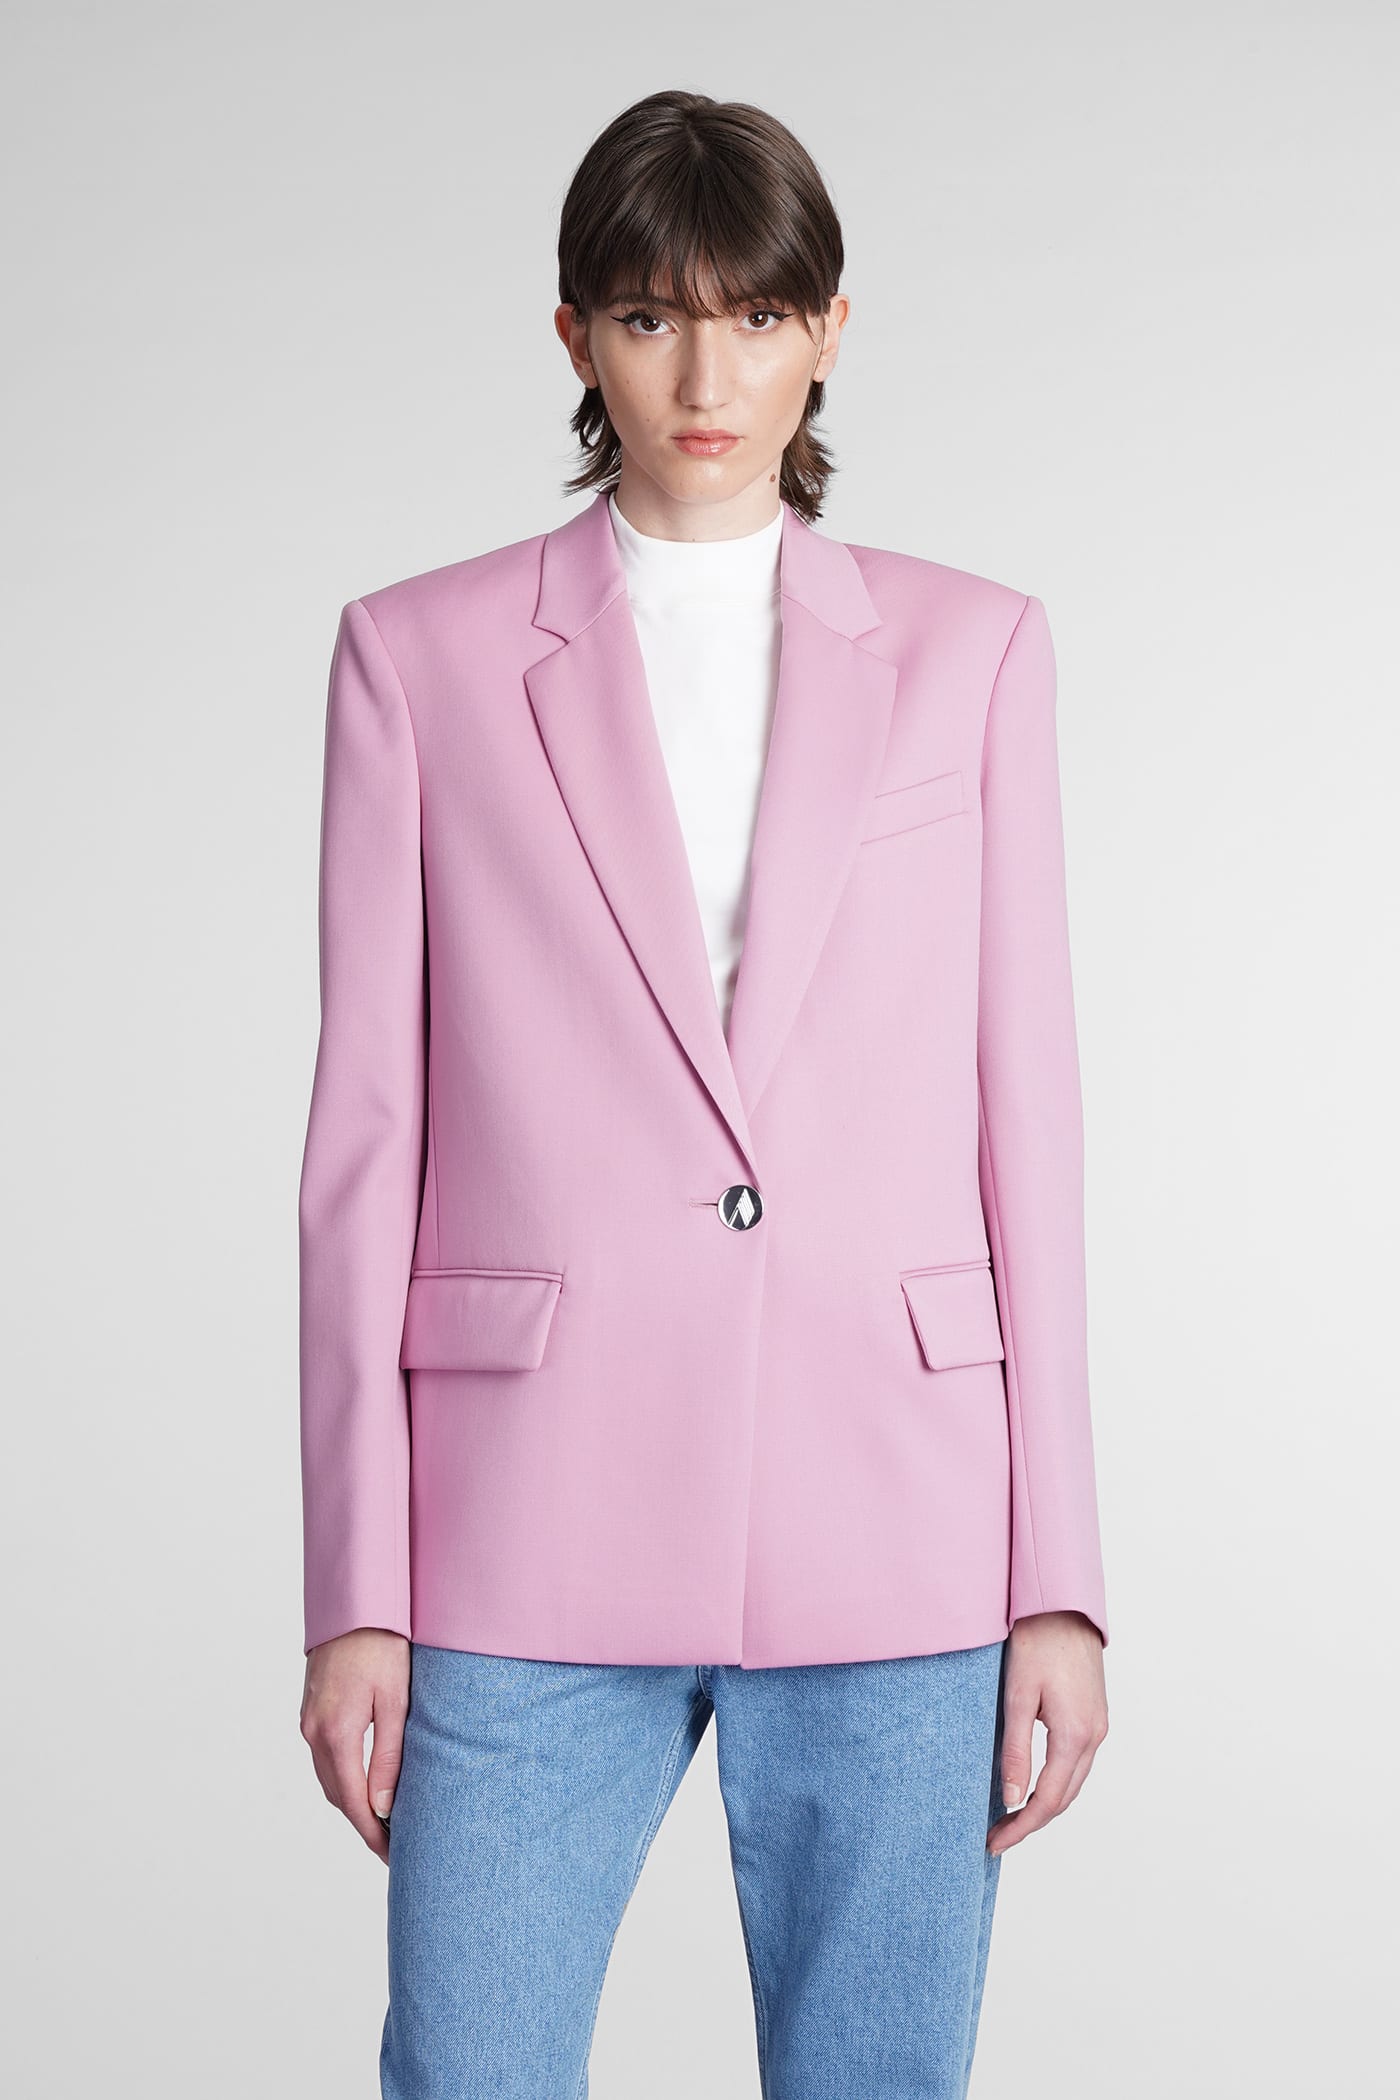 The Attico Bianca Blazer In Rose-pink Wool